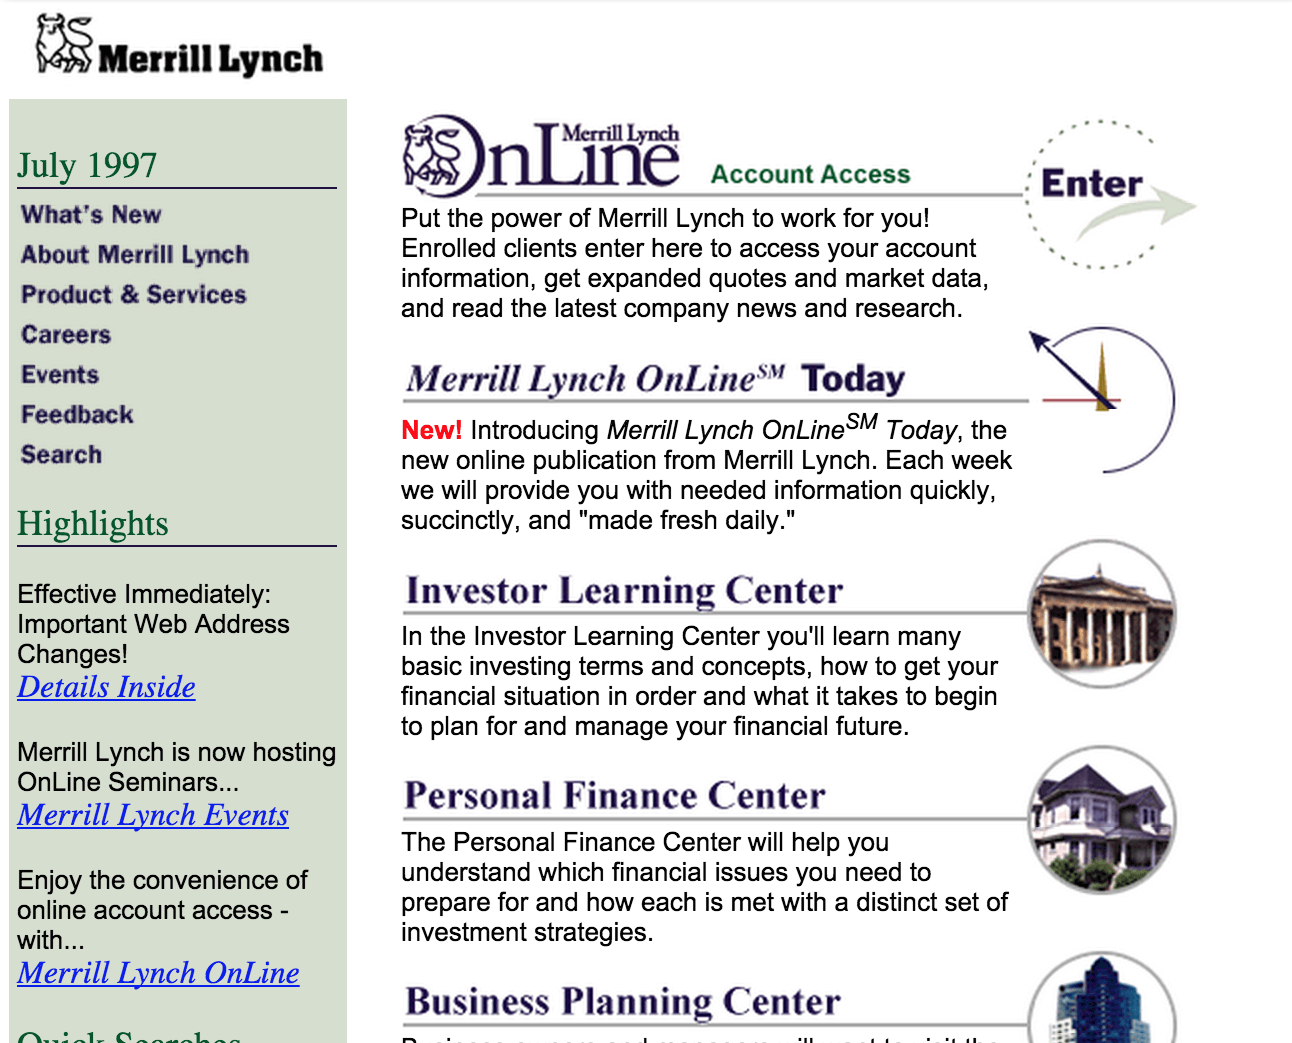 Homepage of Merrill Lynch - 1997